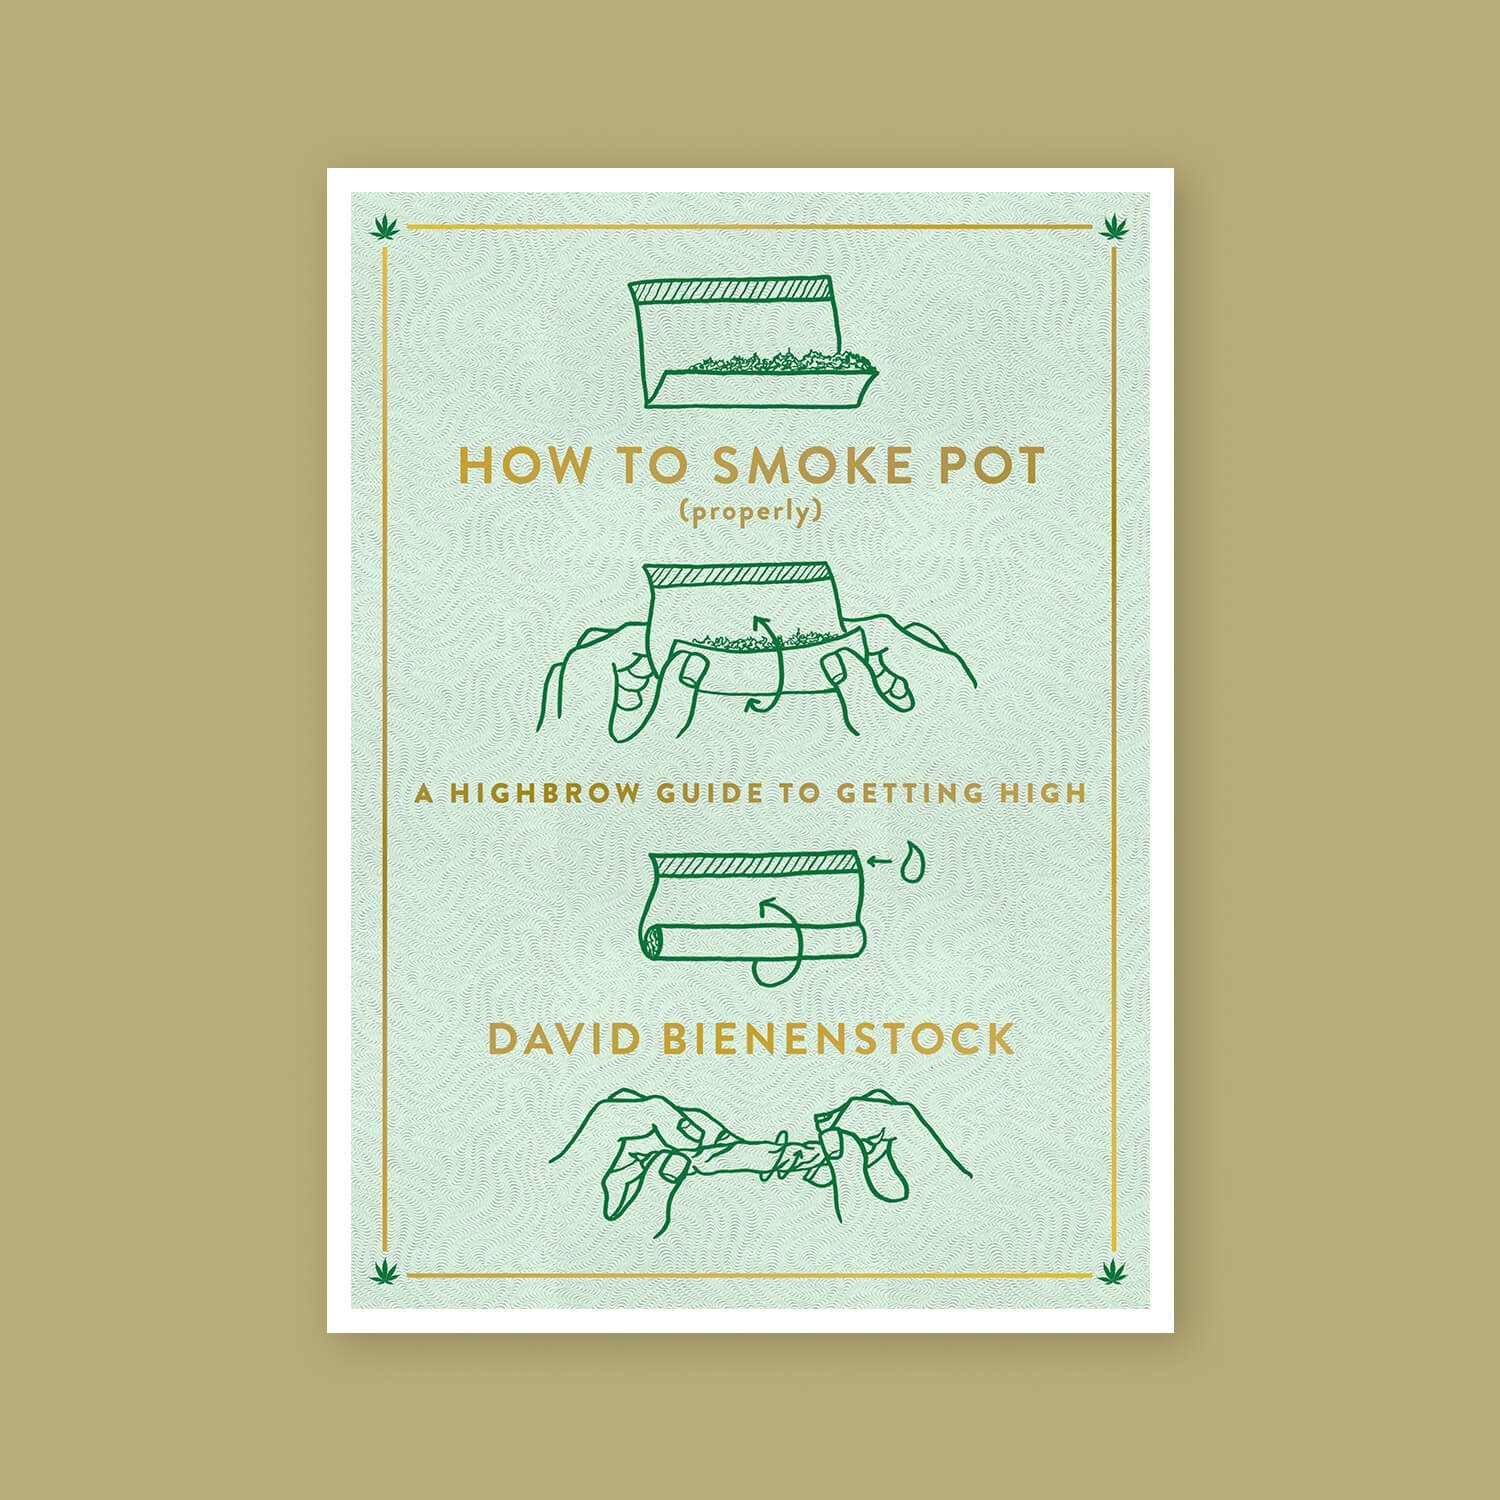 How to smoke pot